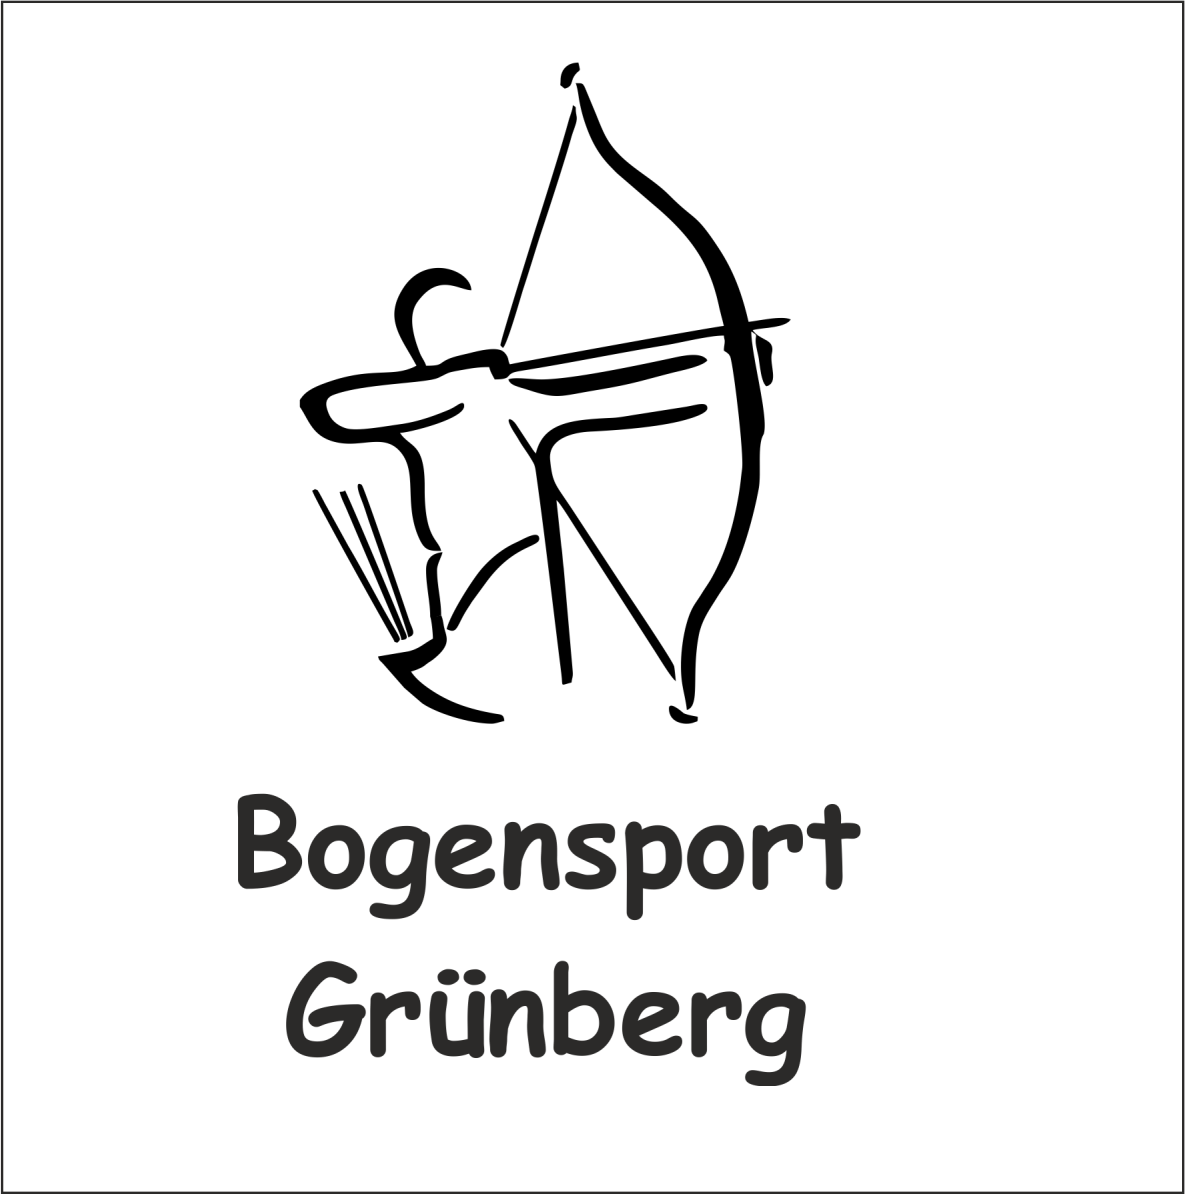 Bogensport Grünberg